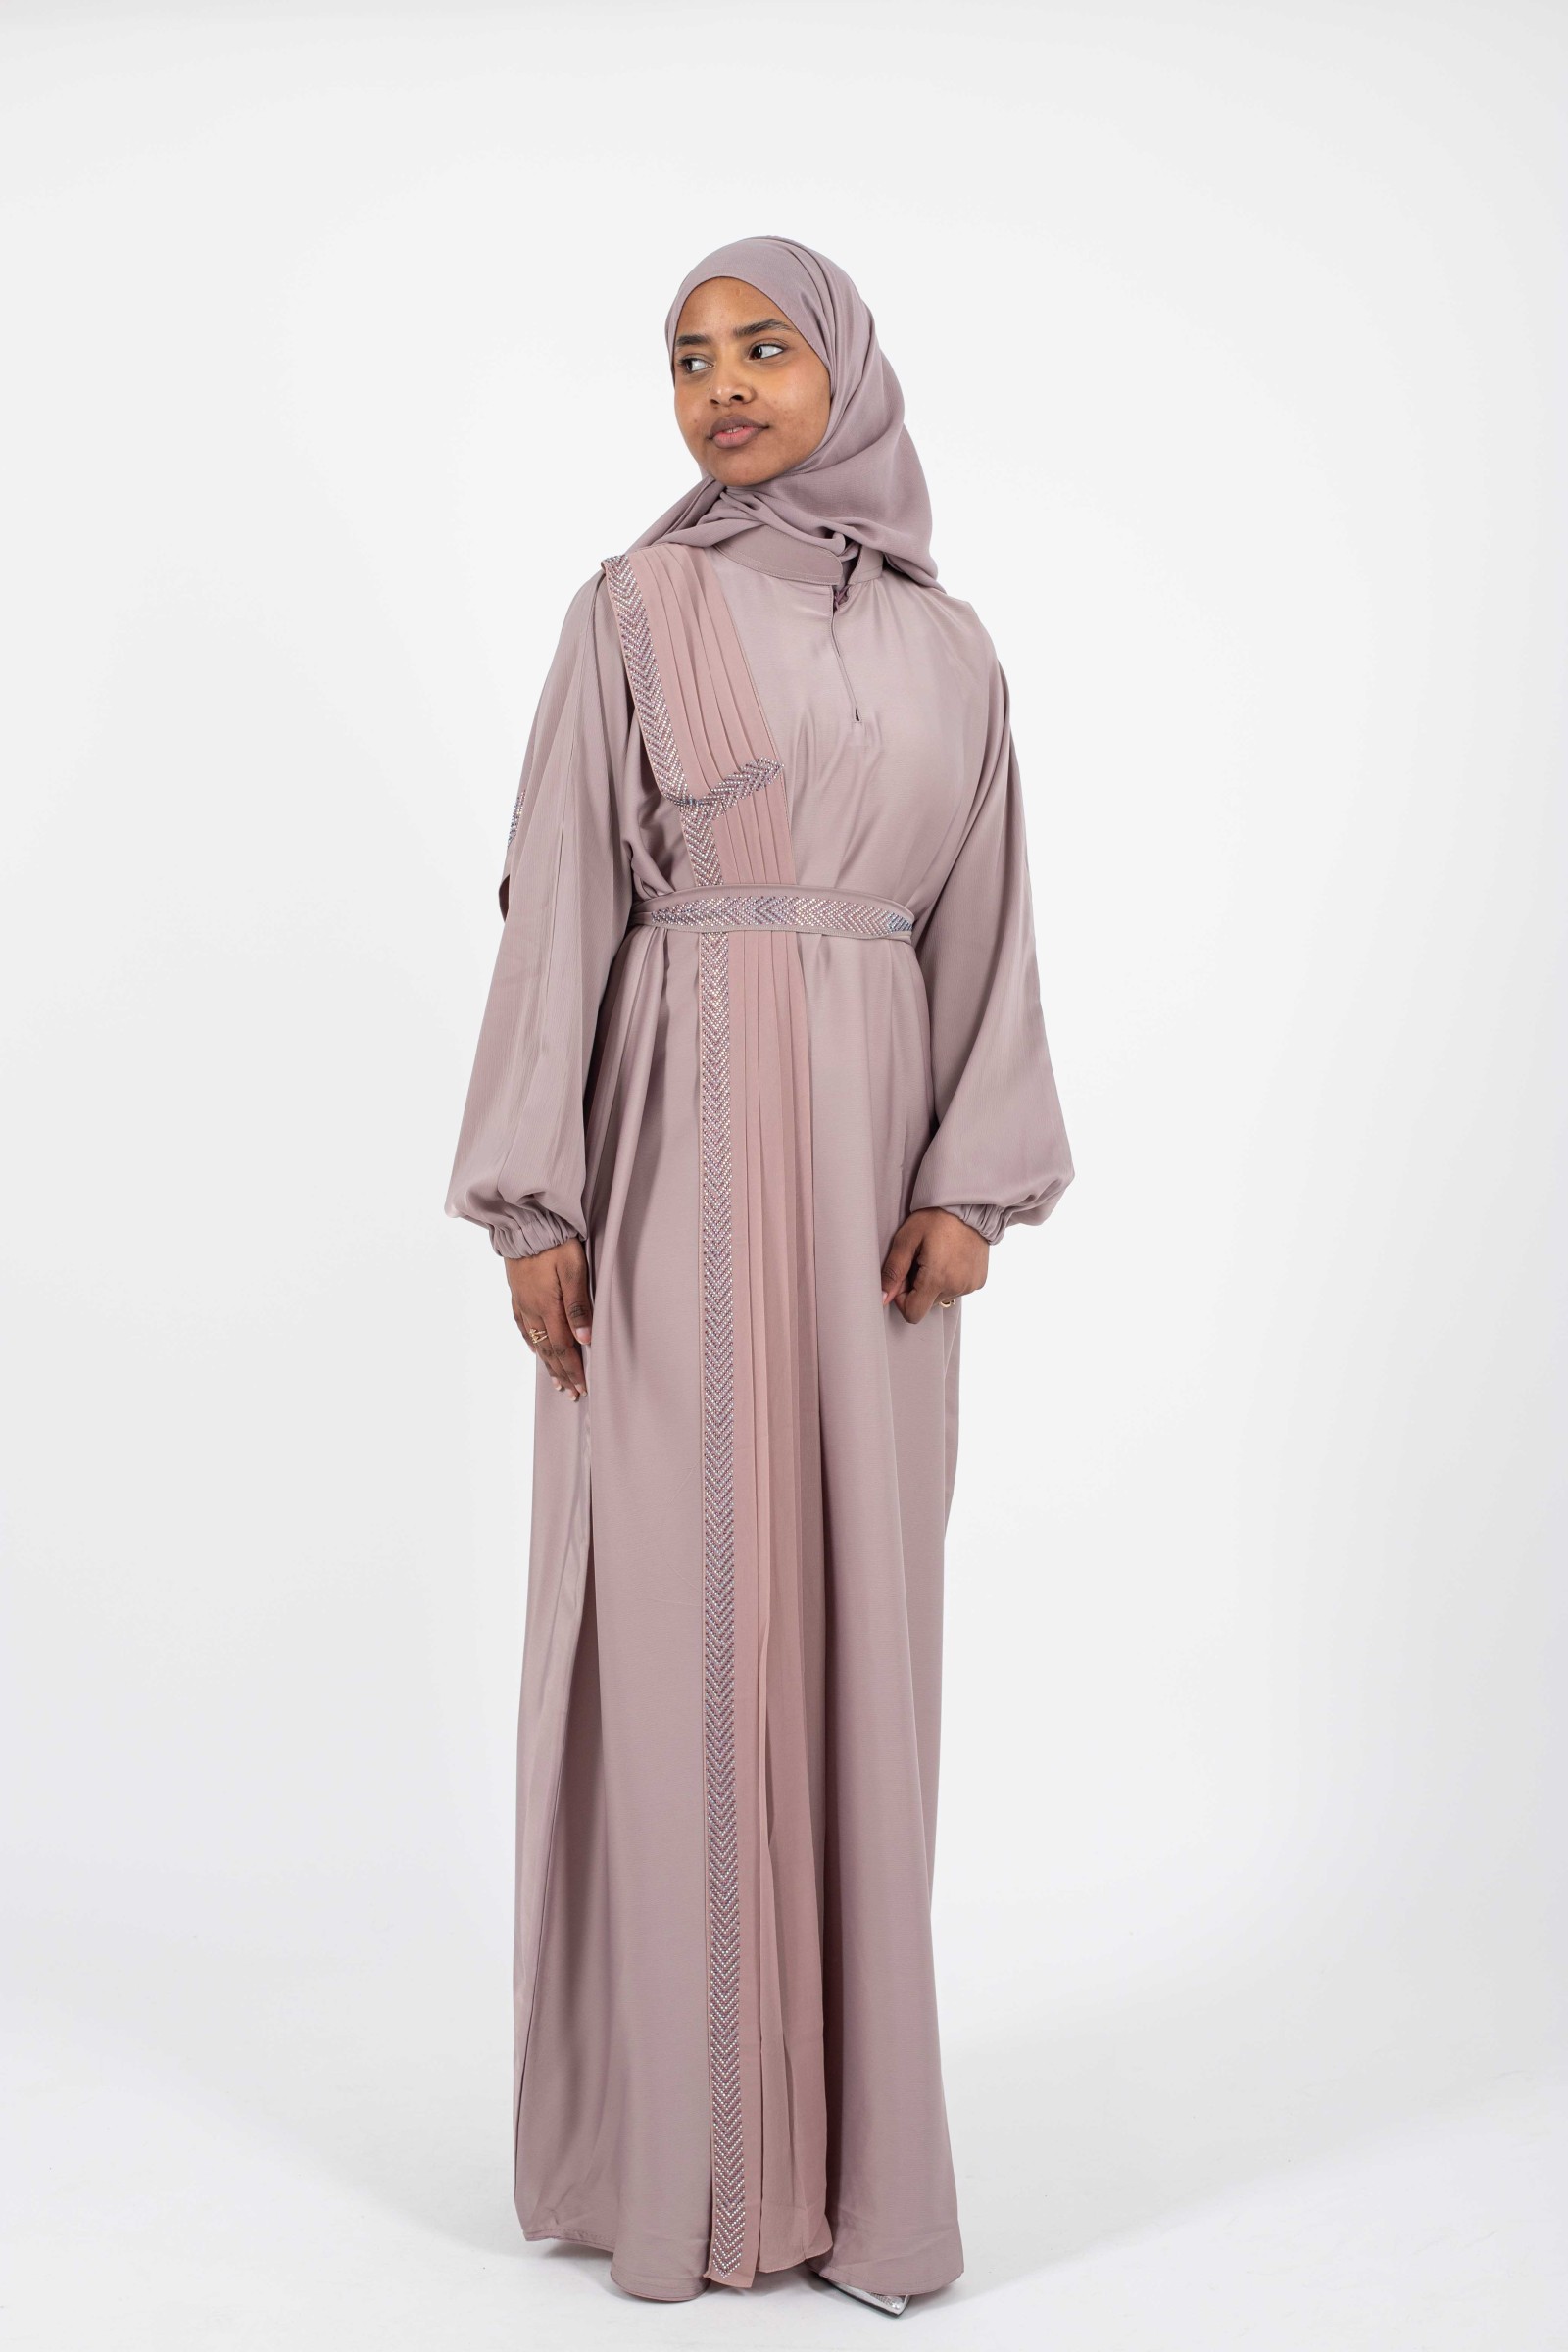 Abaya dubai femme musulmane chic et moderne